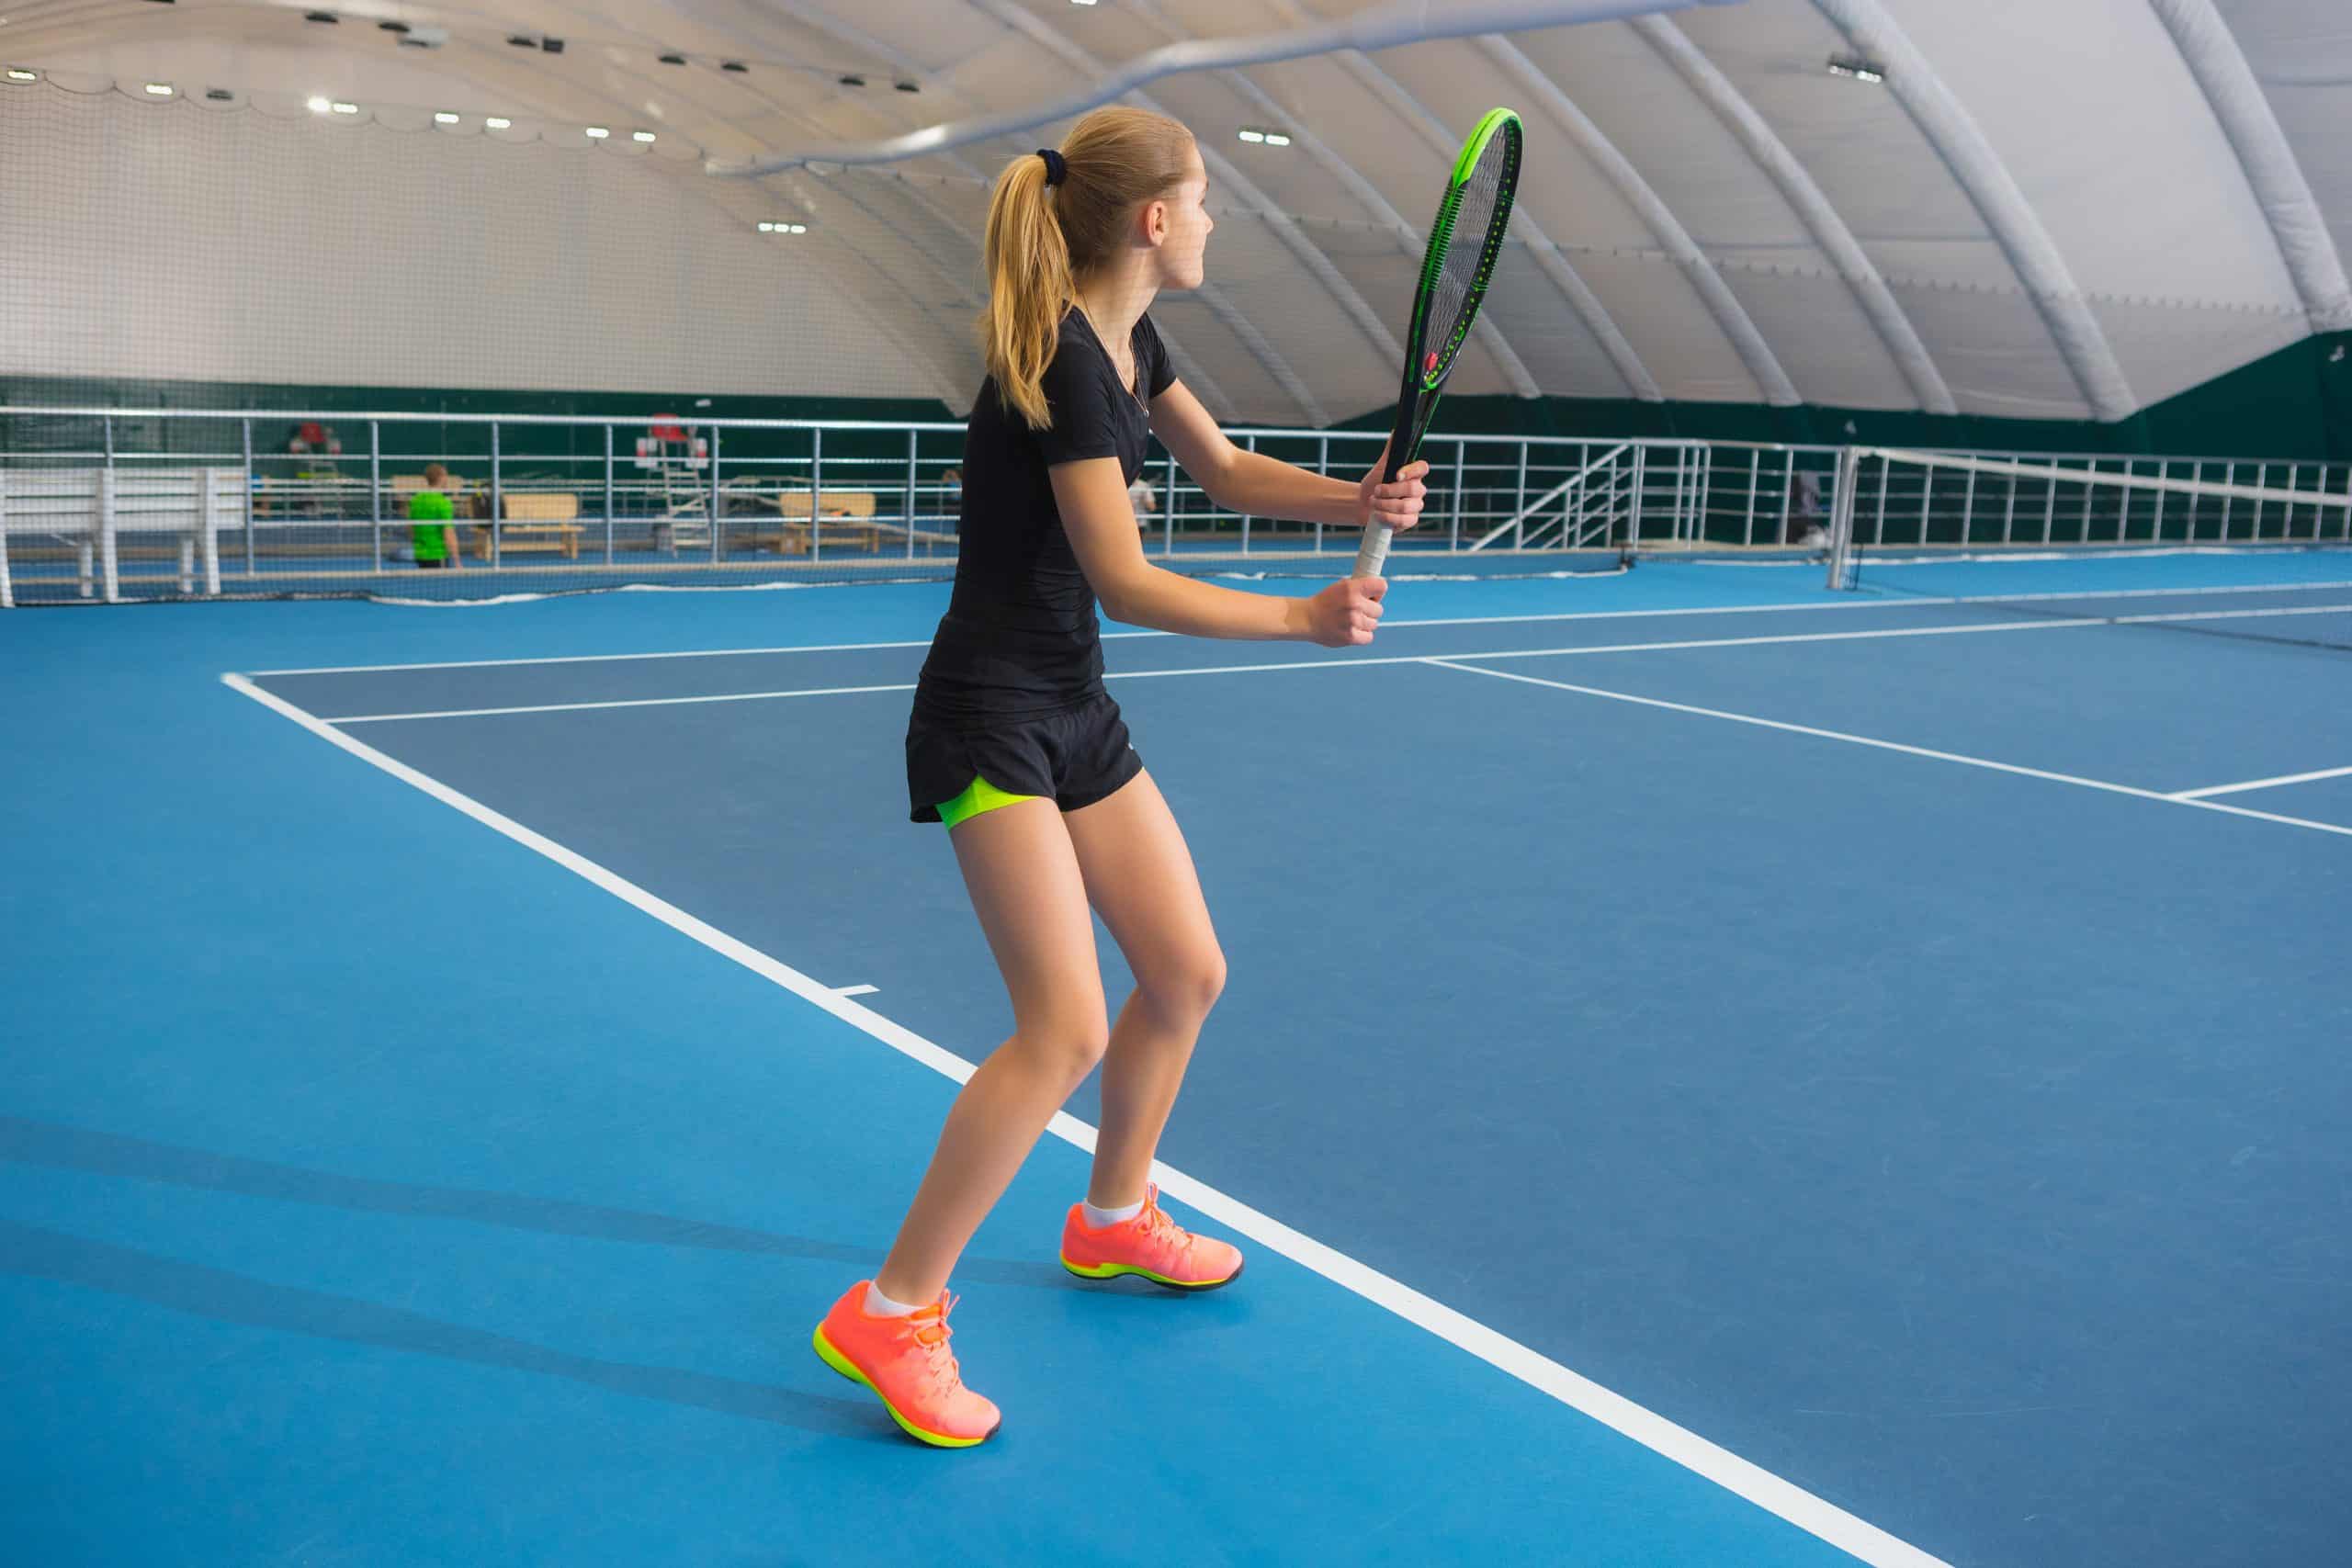 Tennis primer – learning forhand for beginners